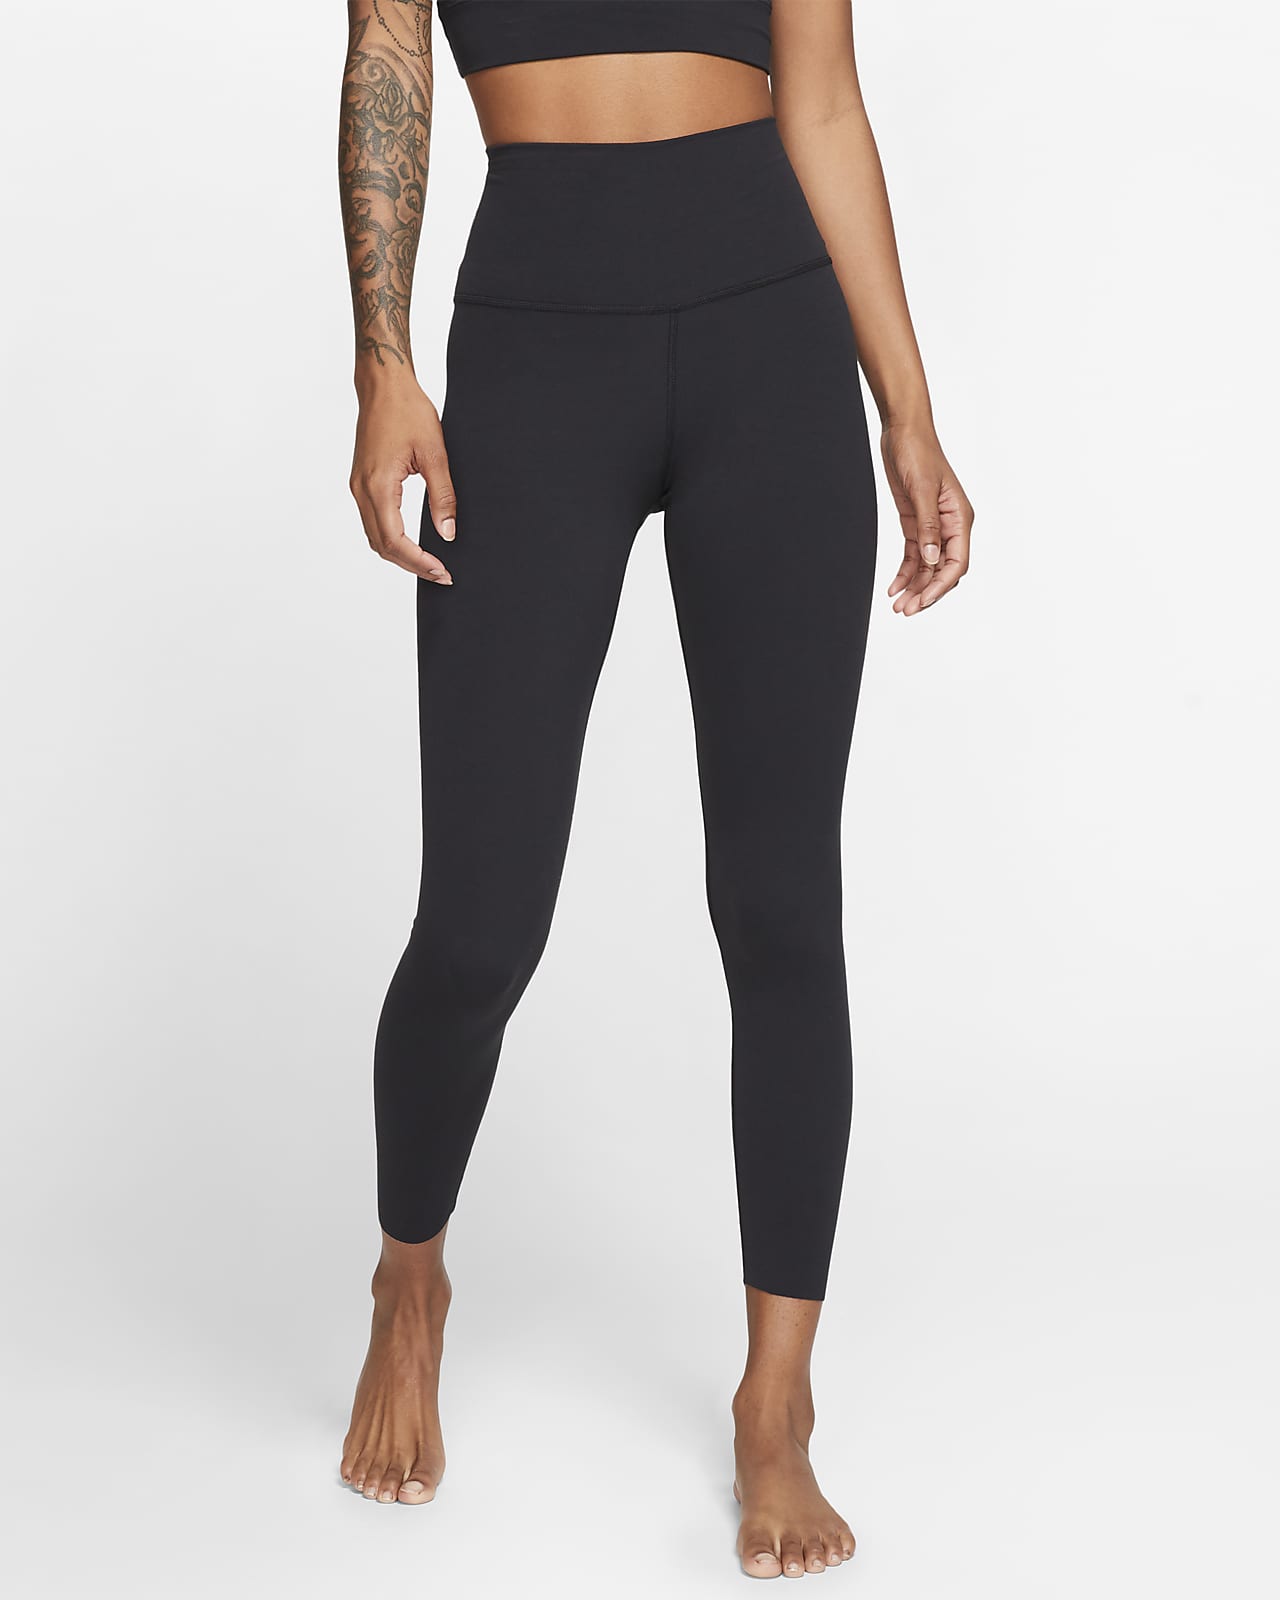 Leggings de tela Infinalon con cintura alta de 7/8 para mujer Nike Yoga Dri-FIT Luxe